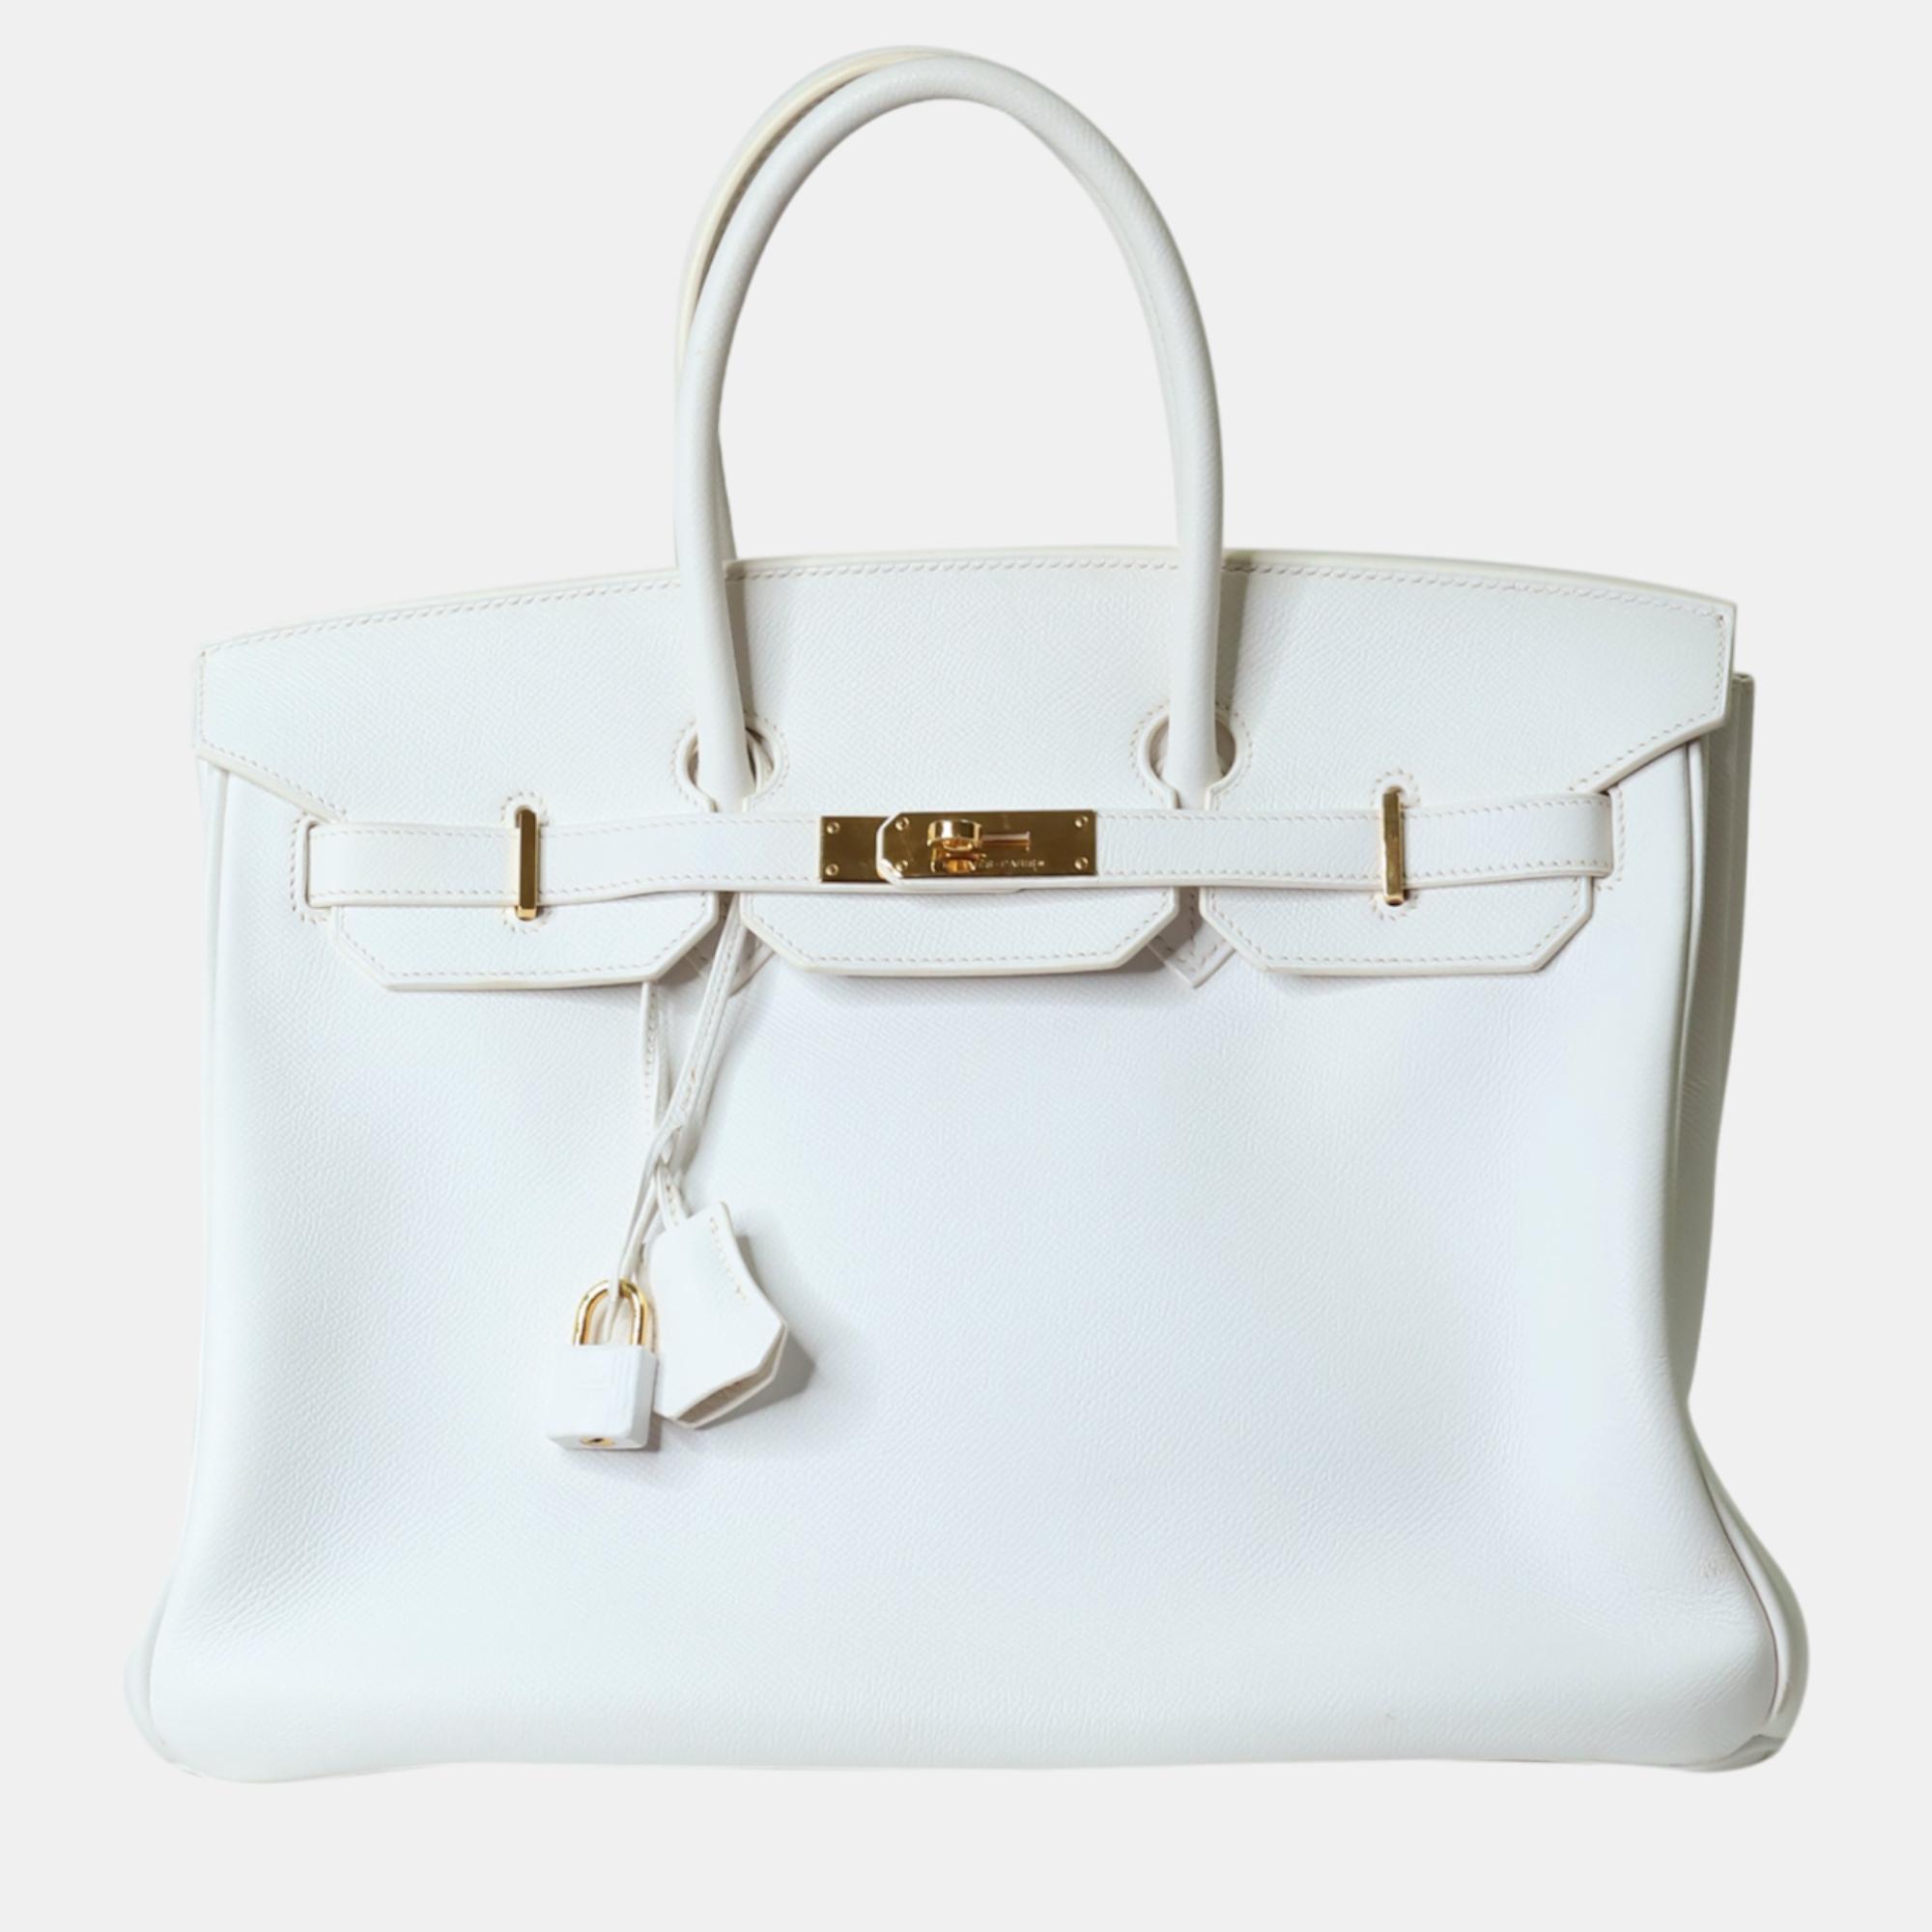 Hermes white clemence leather birkin 35 bag